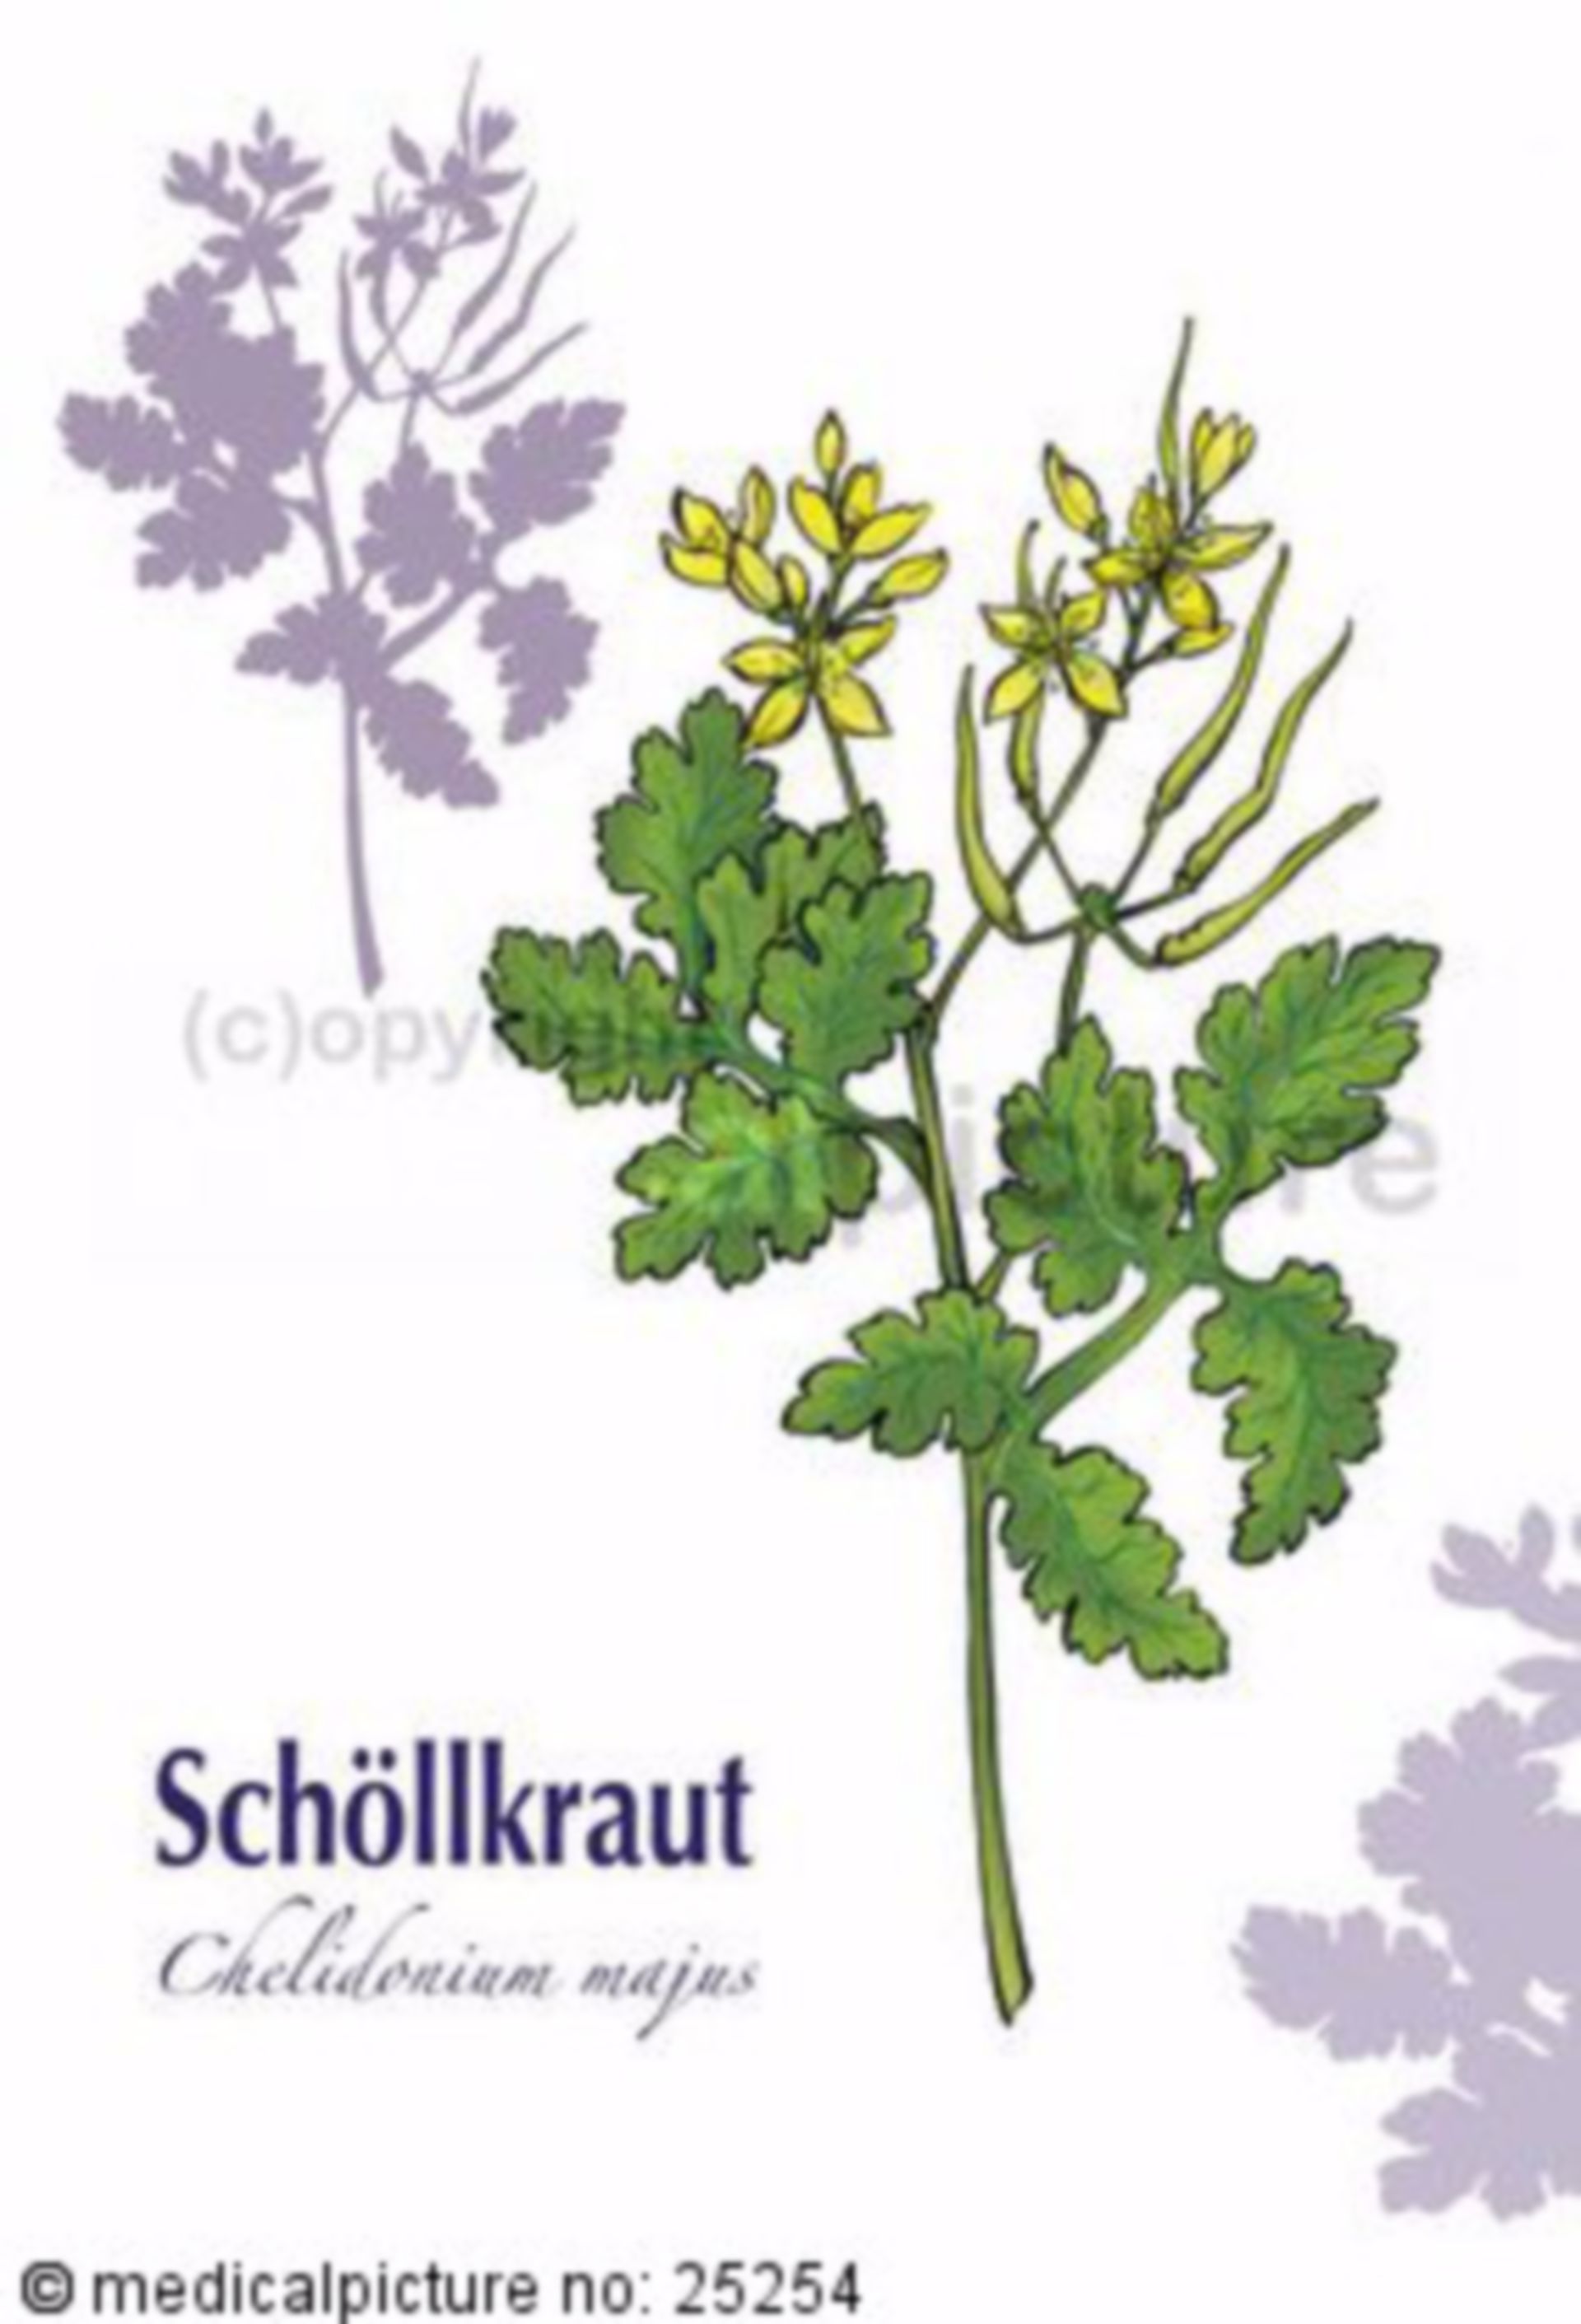  Schöllkraut, Chelidonium majus 